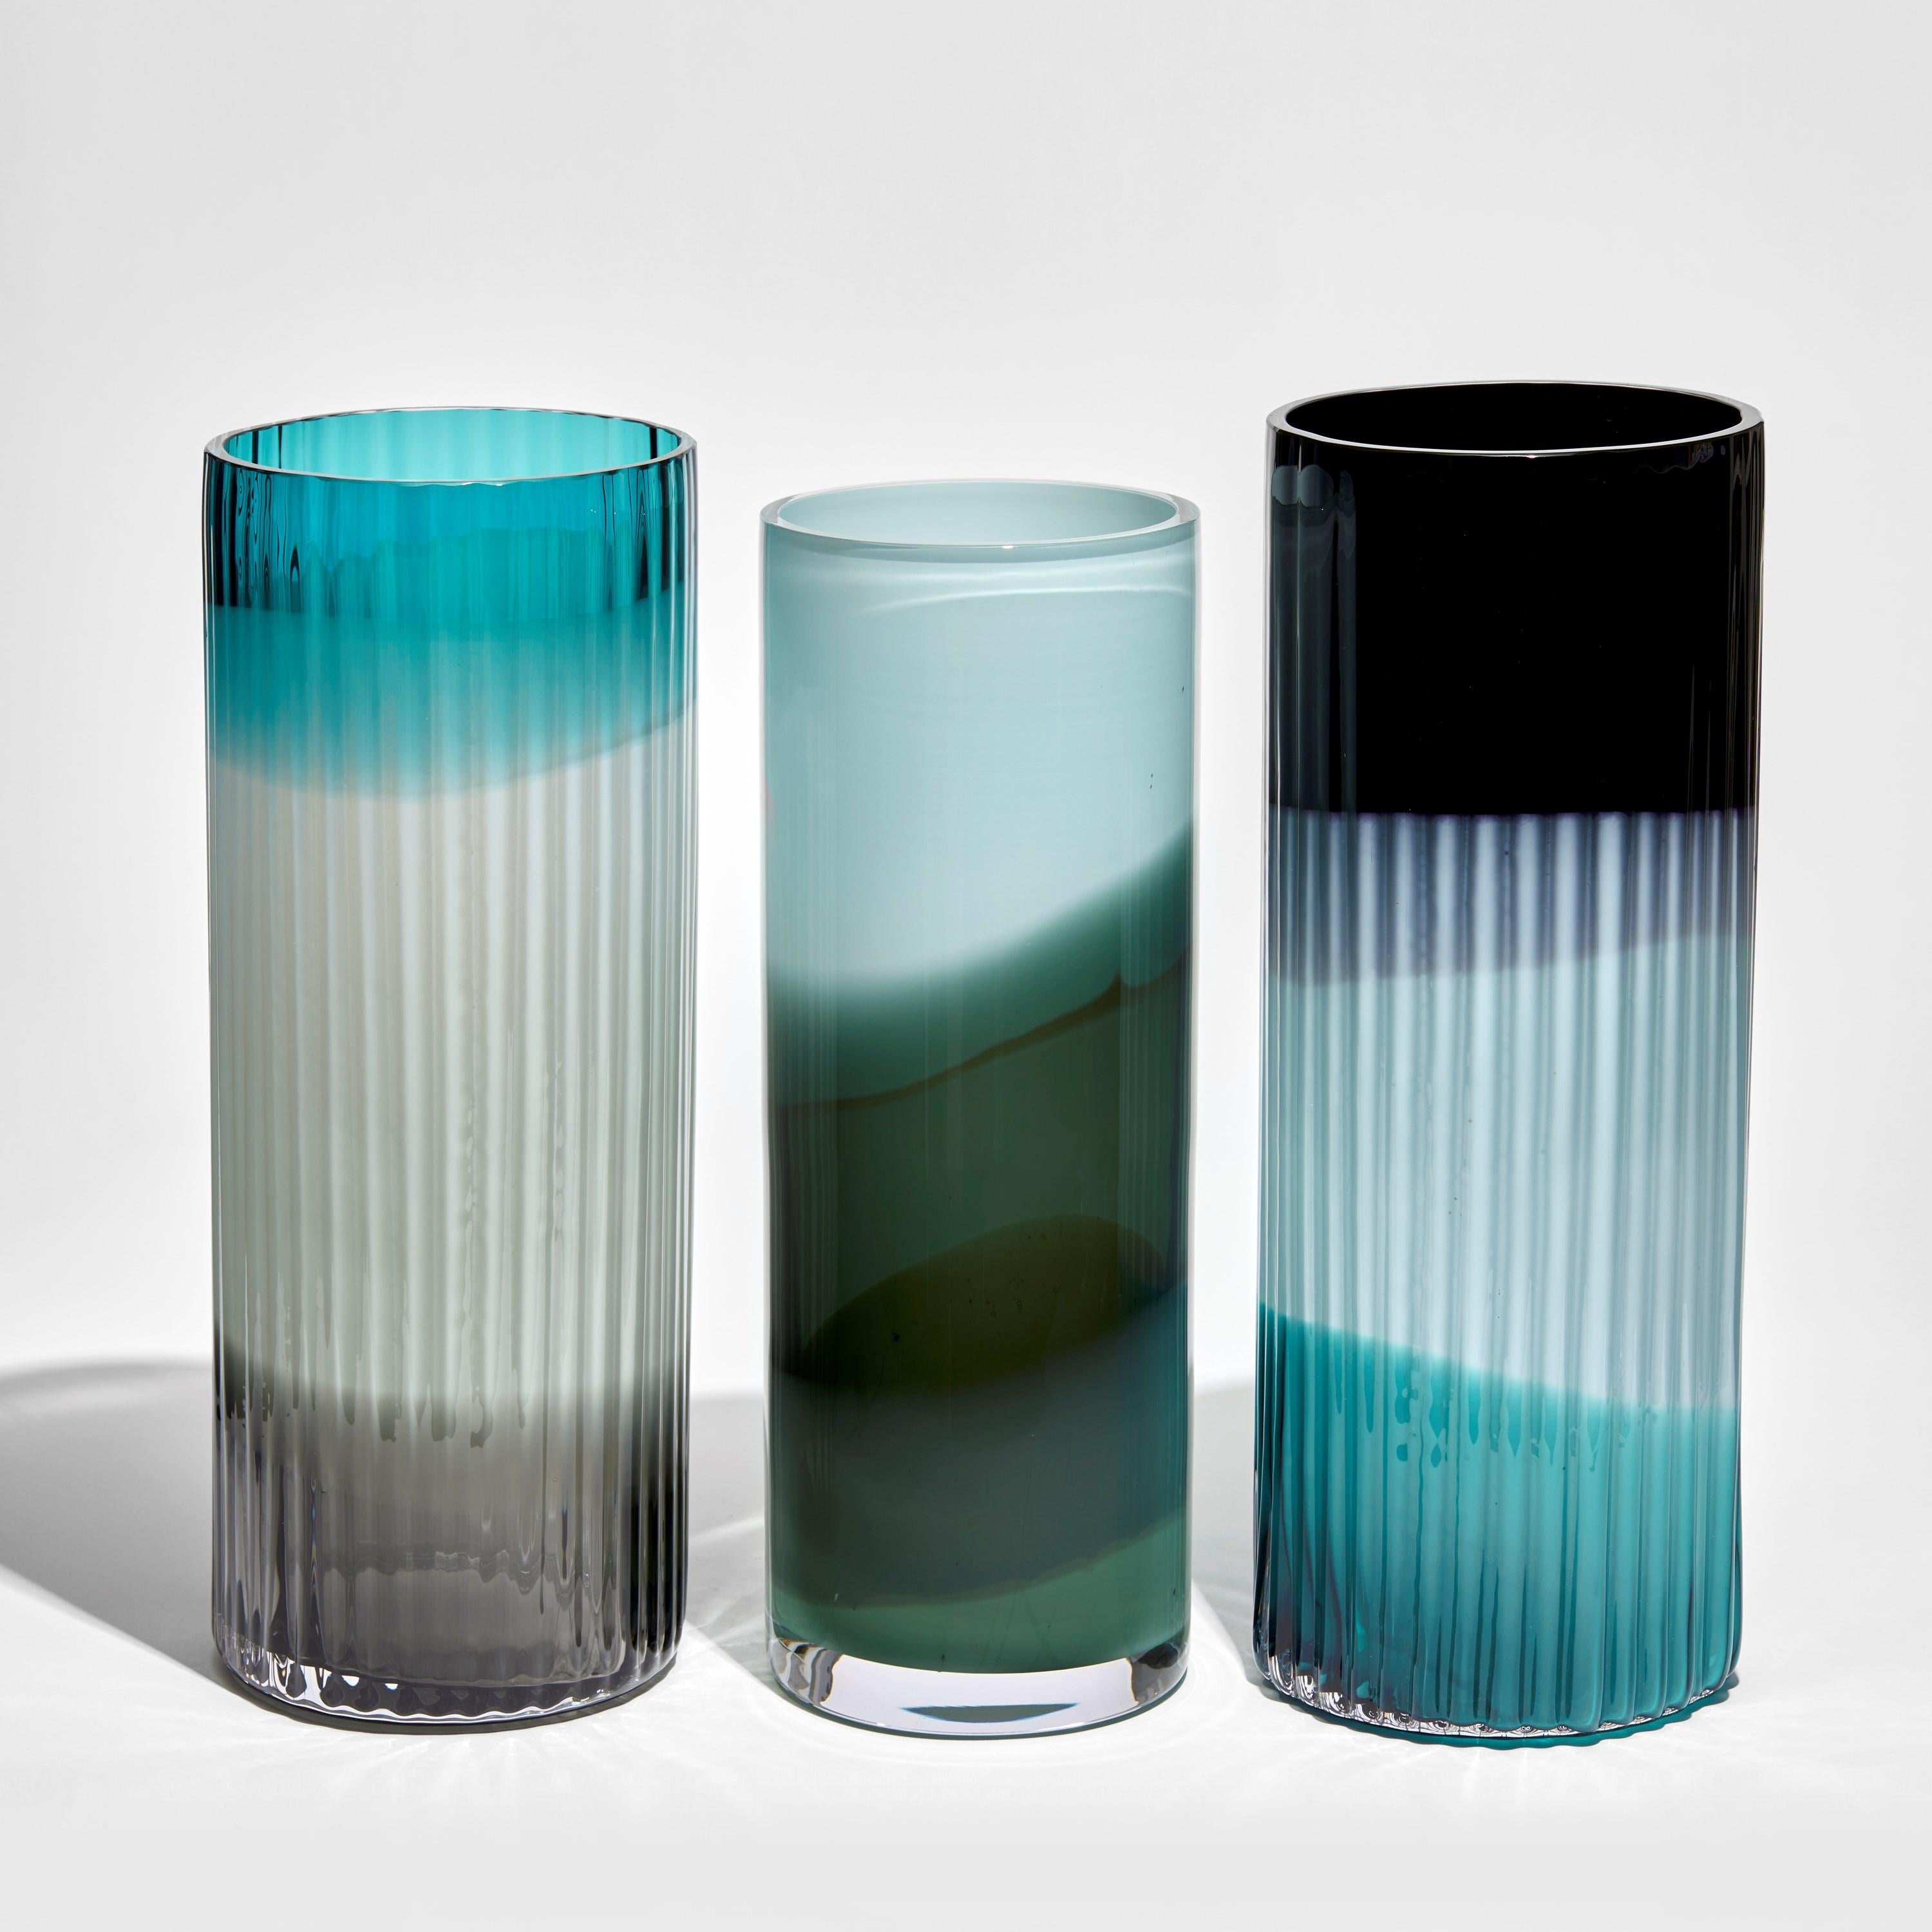 Organic Modern Plissé Vase in Turquoise, Light Blue & Black, a Glass Vase by Lena Bergström For Sale